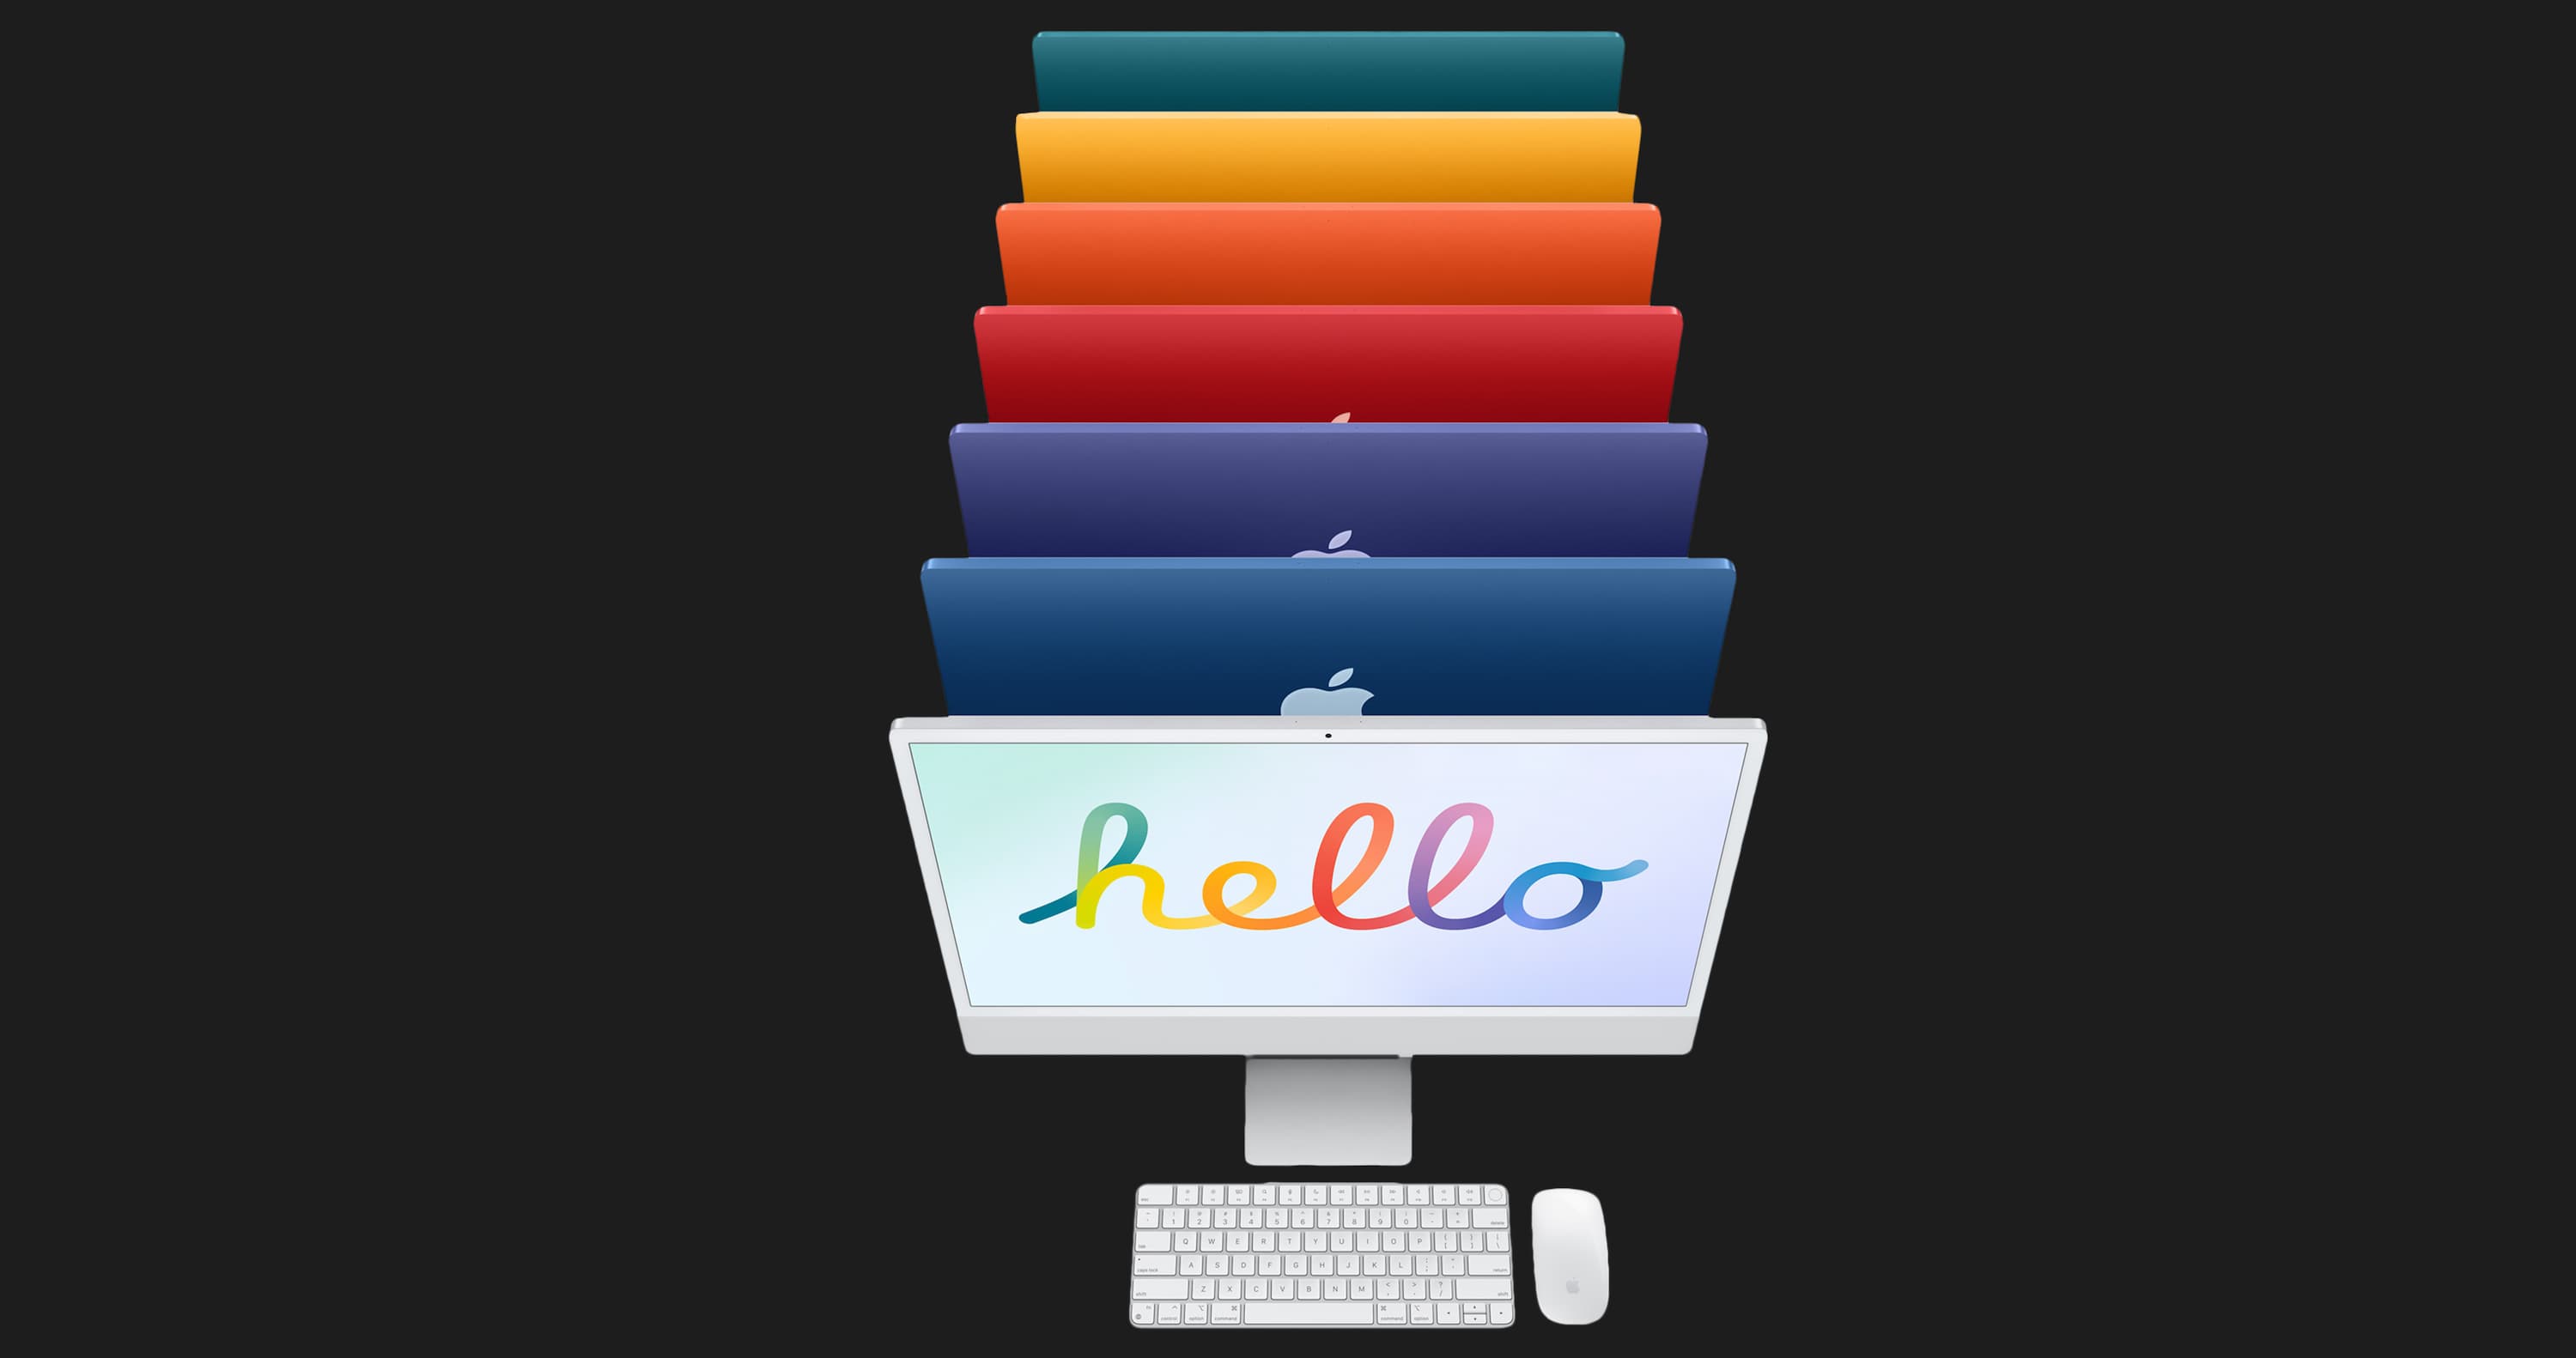 Apple iMac 24 with Retina 4.5K, 256GB, 8 CPU / 7 GPU (Blue) (MJV93)